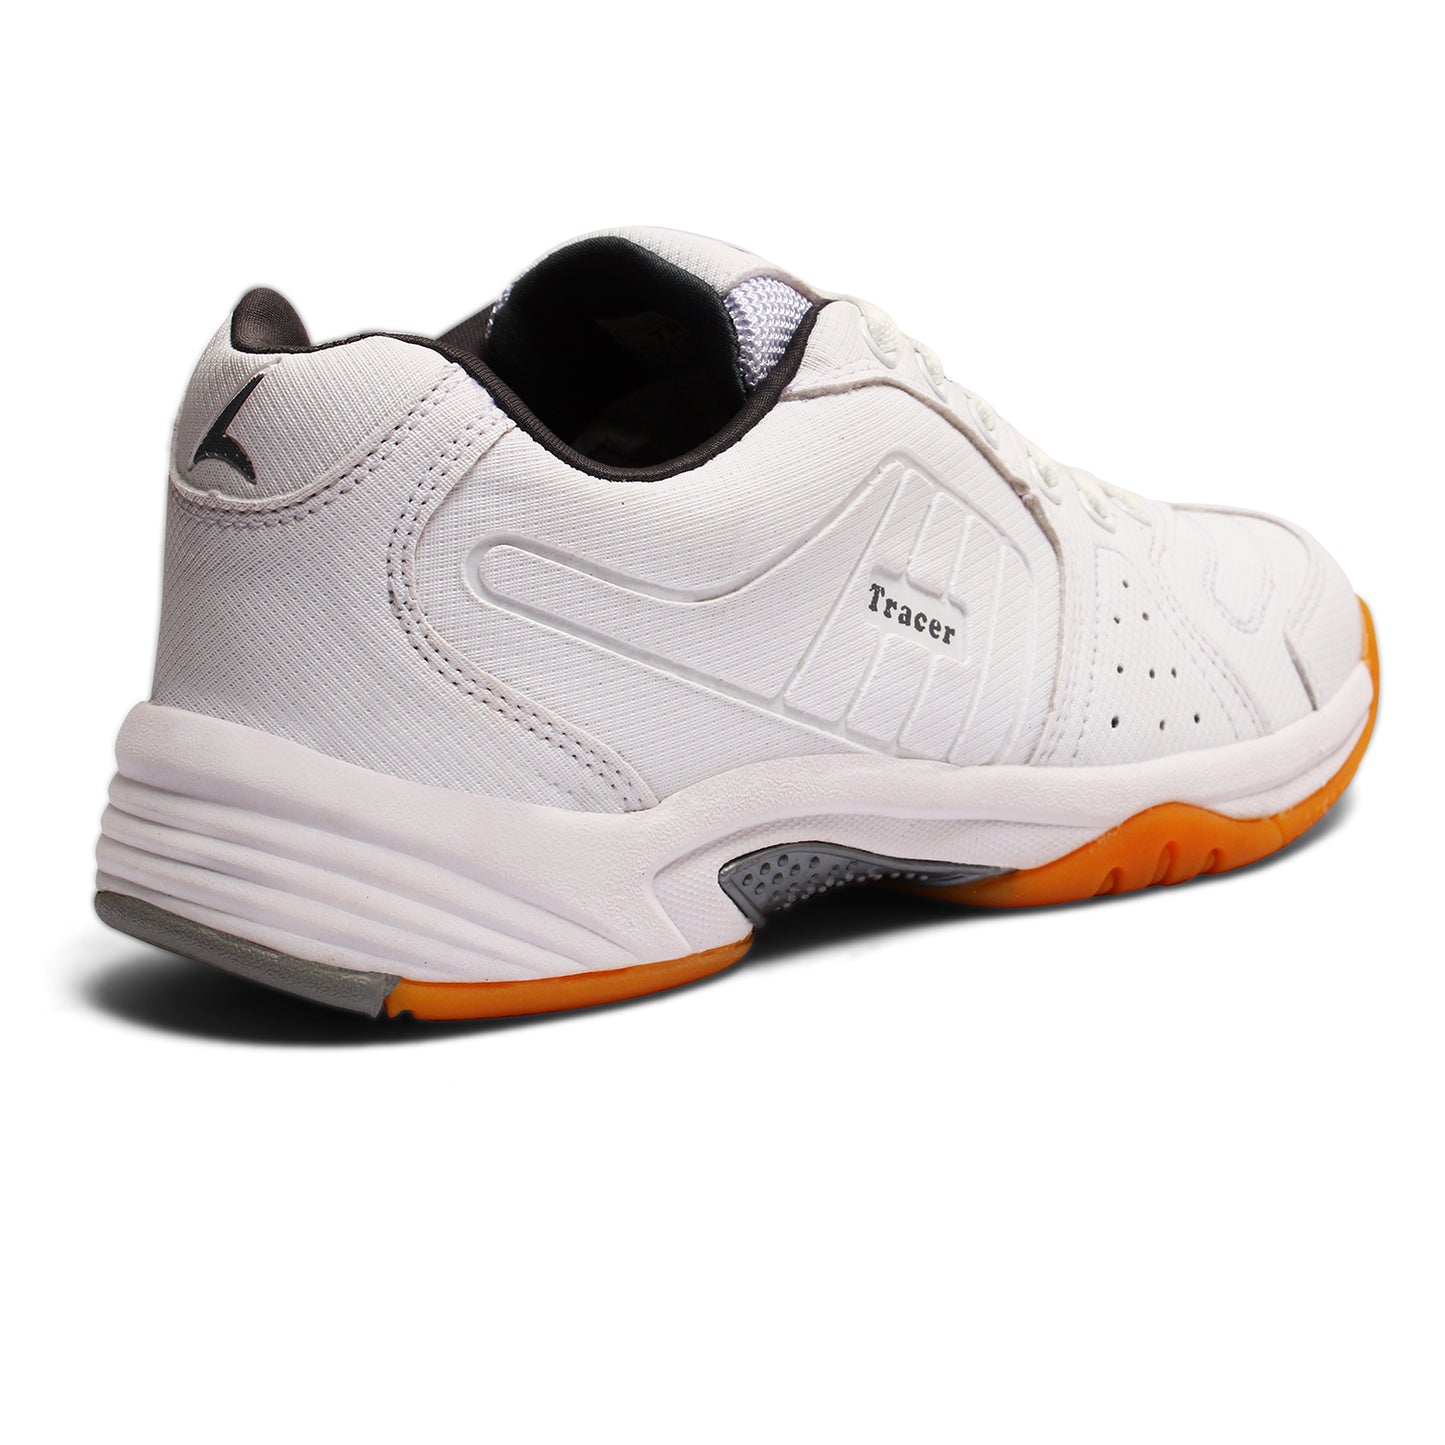 Tennis Shoes for Men White